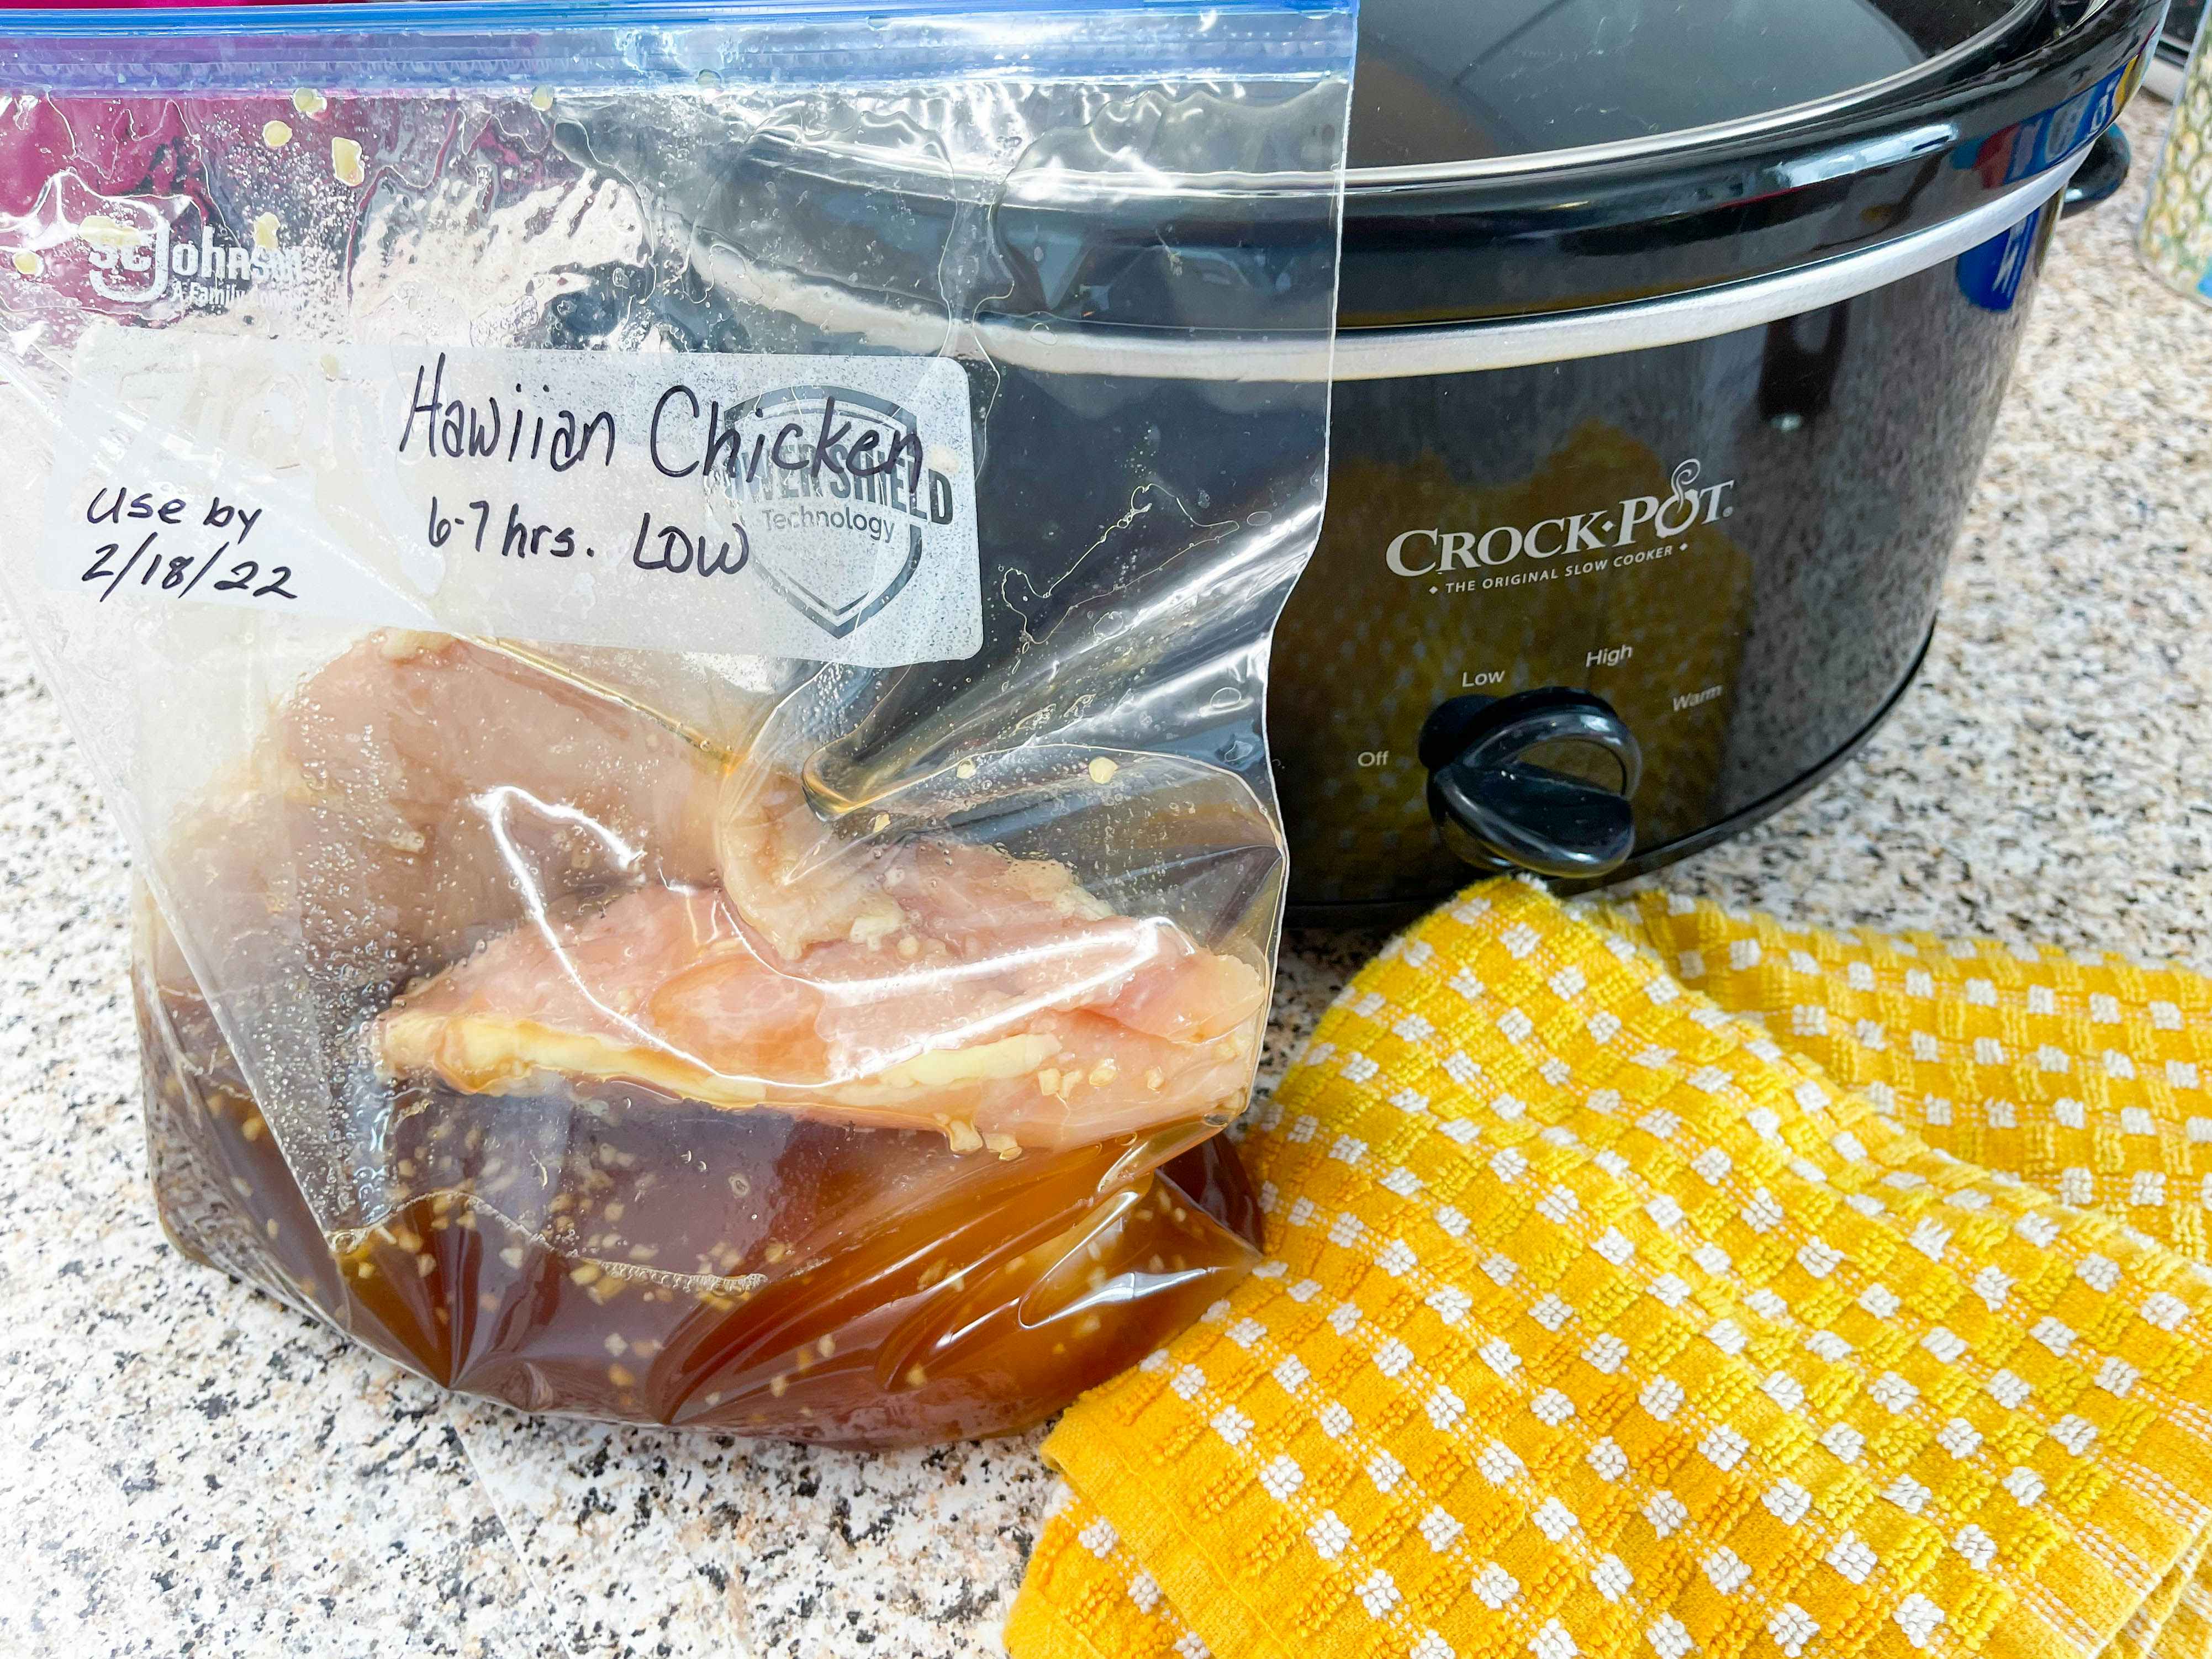 Ziploc bag with a freezer meal next to a crockpot